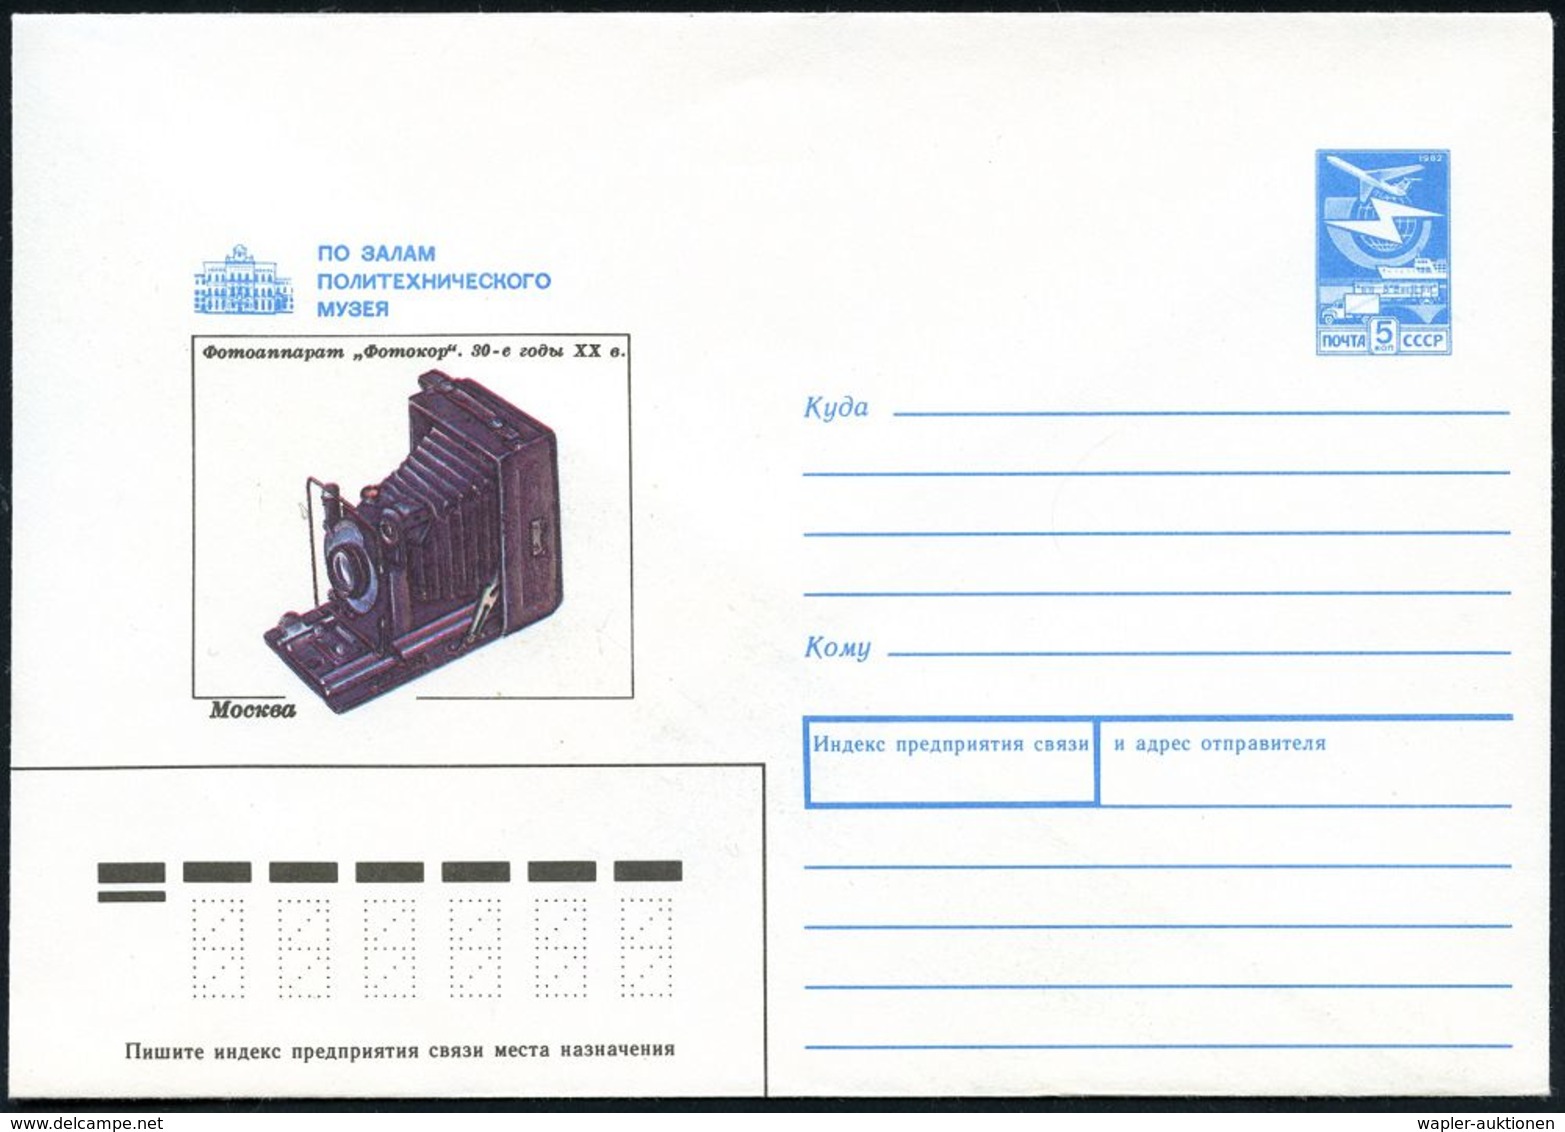 FOTOGRAFIE / KAMERAS / FOTOINDUSTRIE : UdSSR 1989 5 Kop. U Verkehrsmittel, Blau: Polytechn. Museum Moskau = Histor. Foto - Photographie